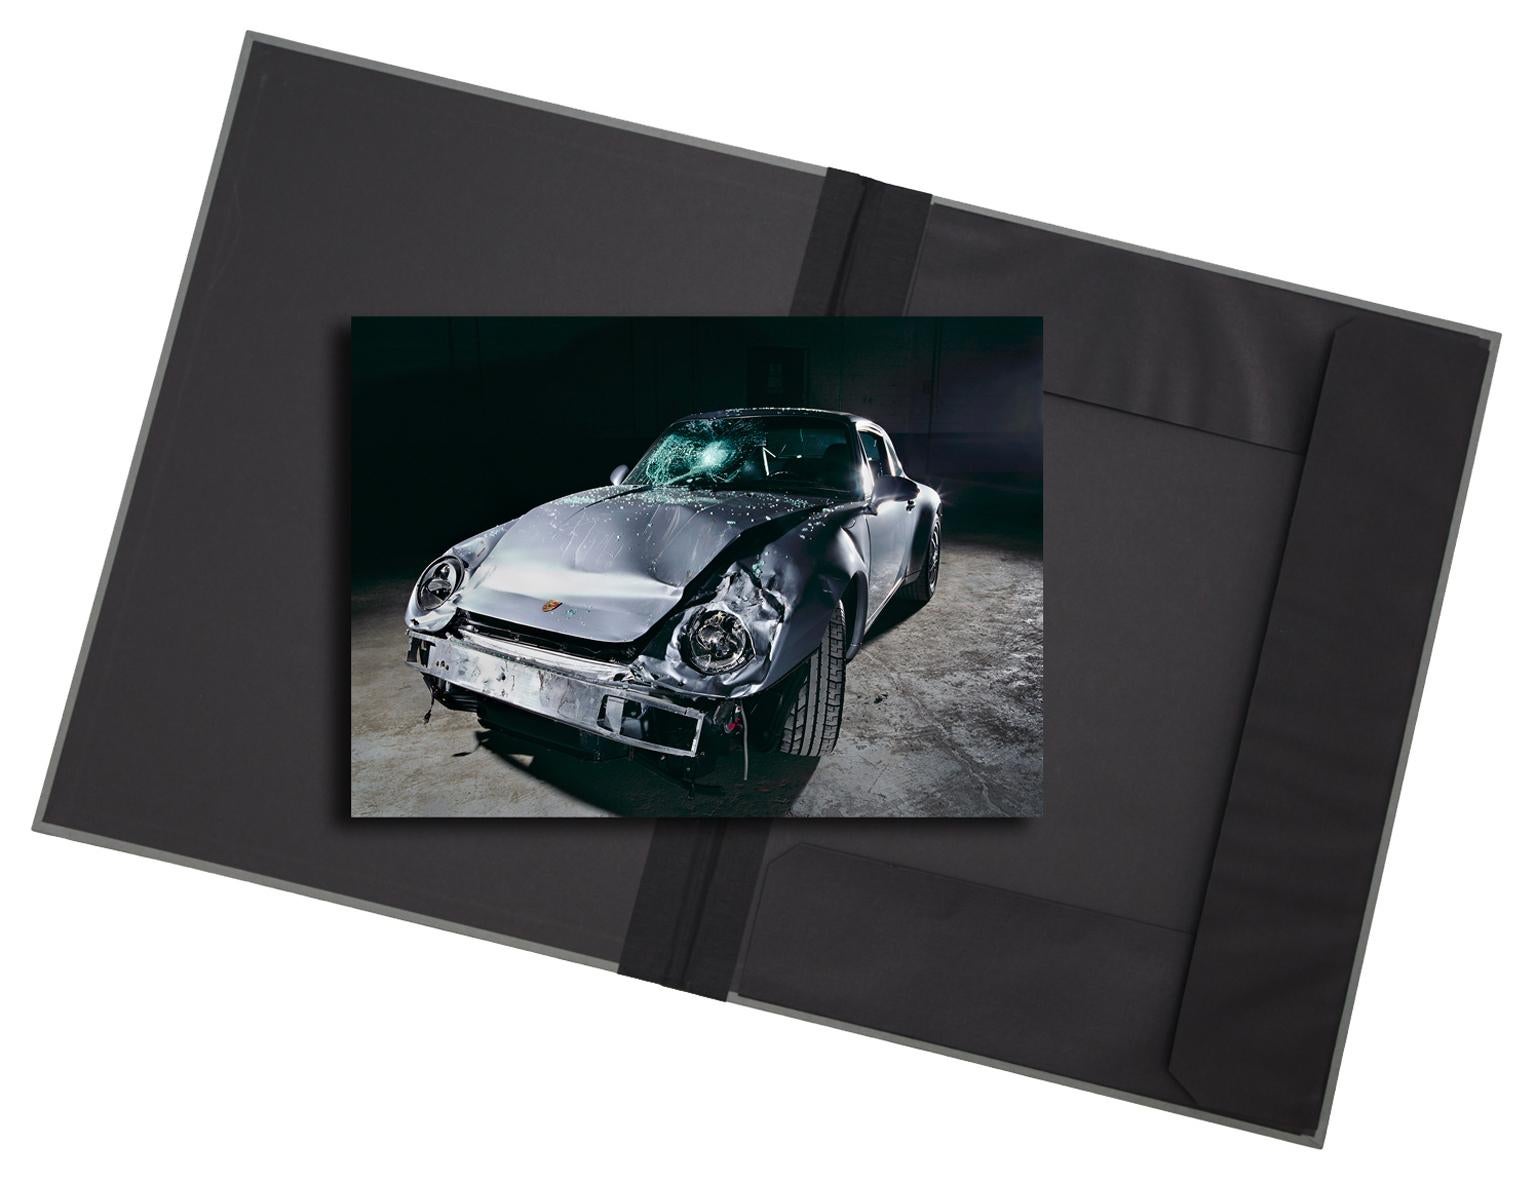 Frank Schott Color Photograph - Porsche (9-1-1) - photograph in classic archival artwork portfolio gift binder